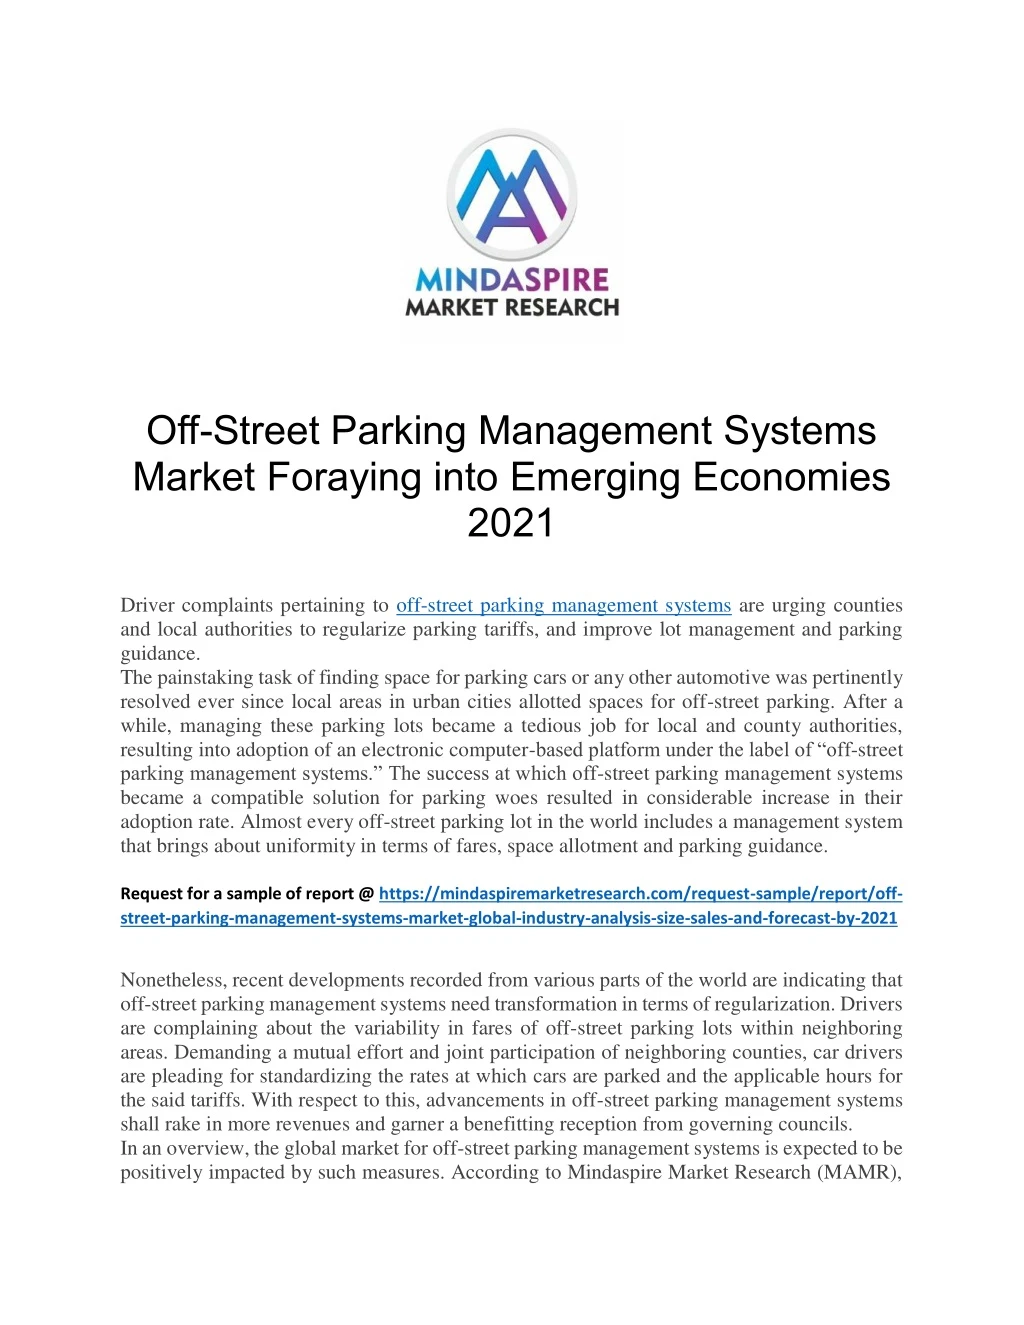 off street parking management systems market